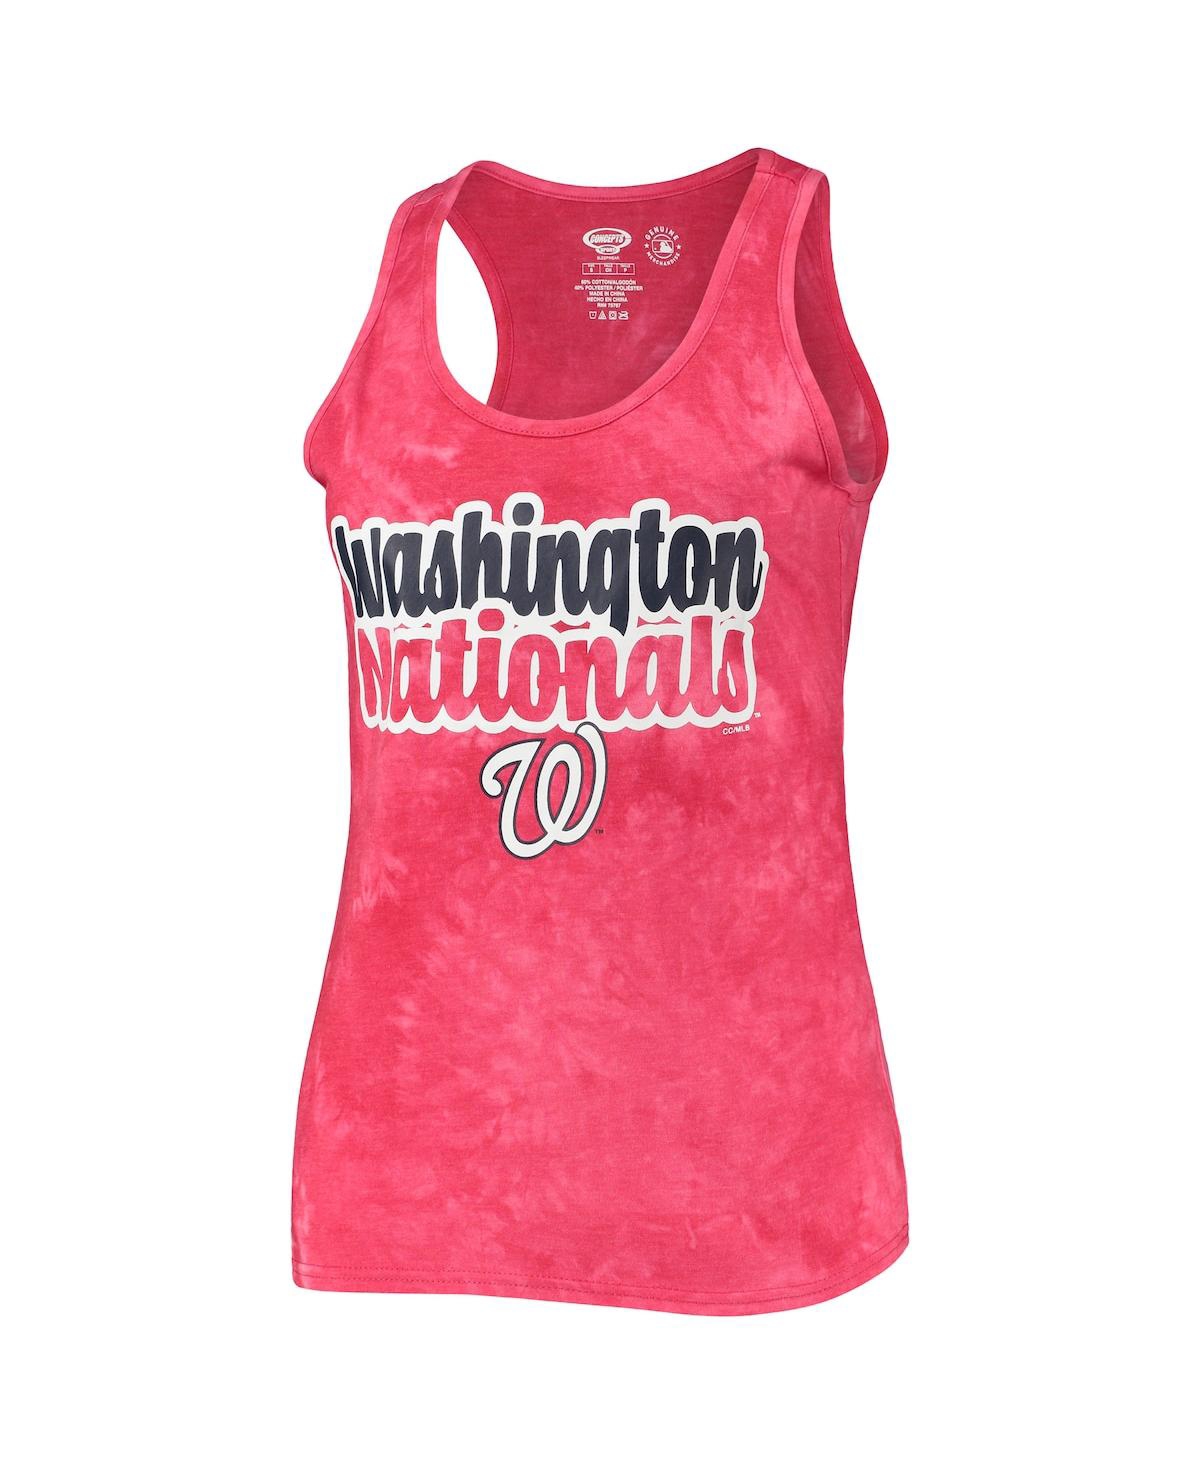 Shop Concepts Sport Women's  Red Washington Nationals Billboard Racerback Tank Top And Shorts Set